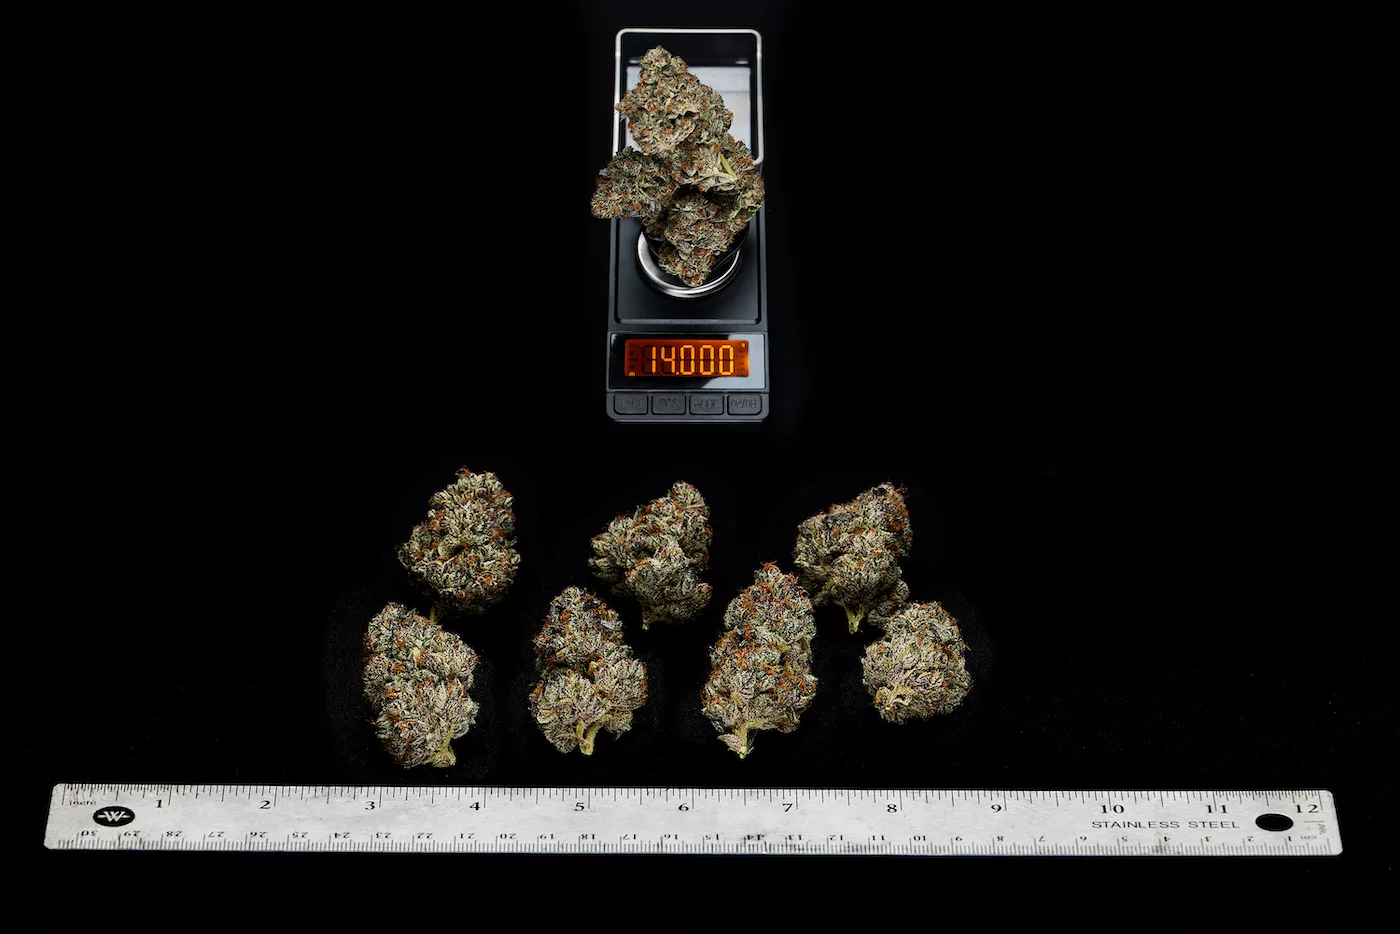 one half-ounce of marijuana for scale